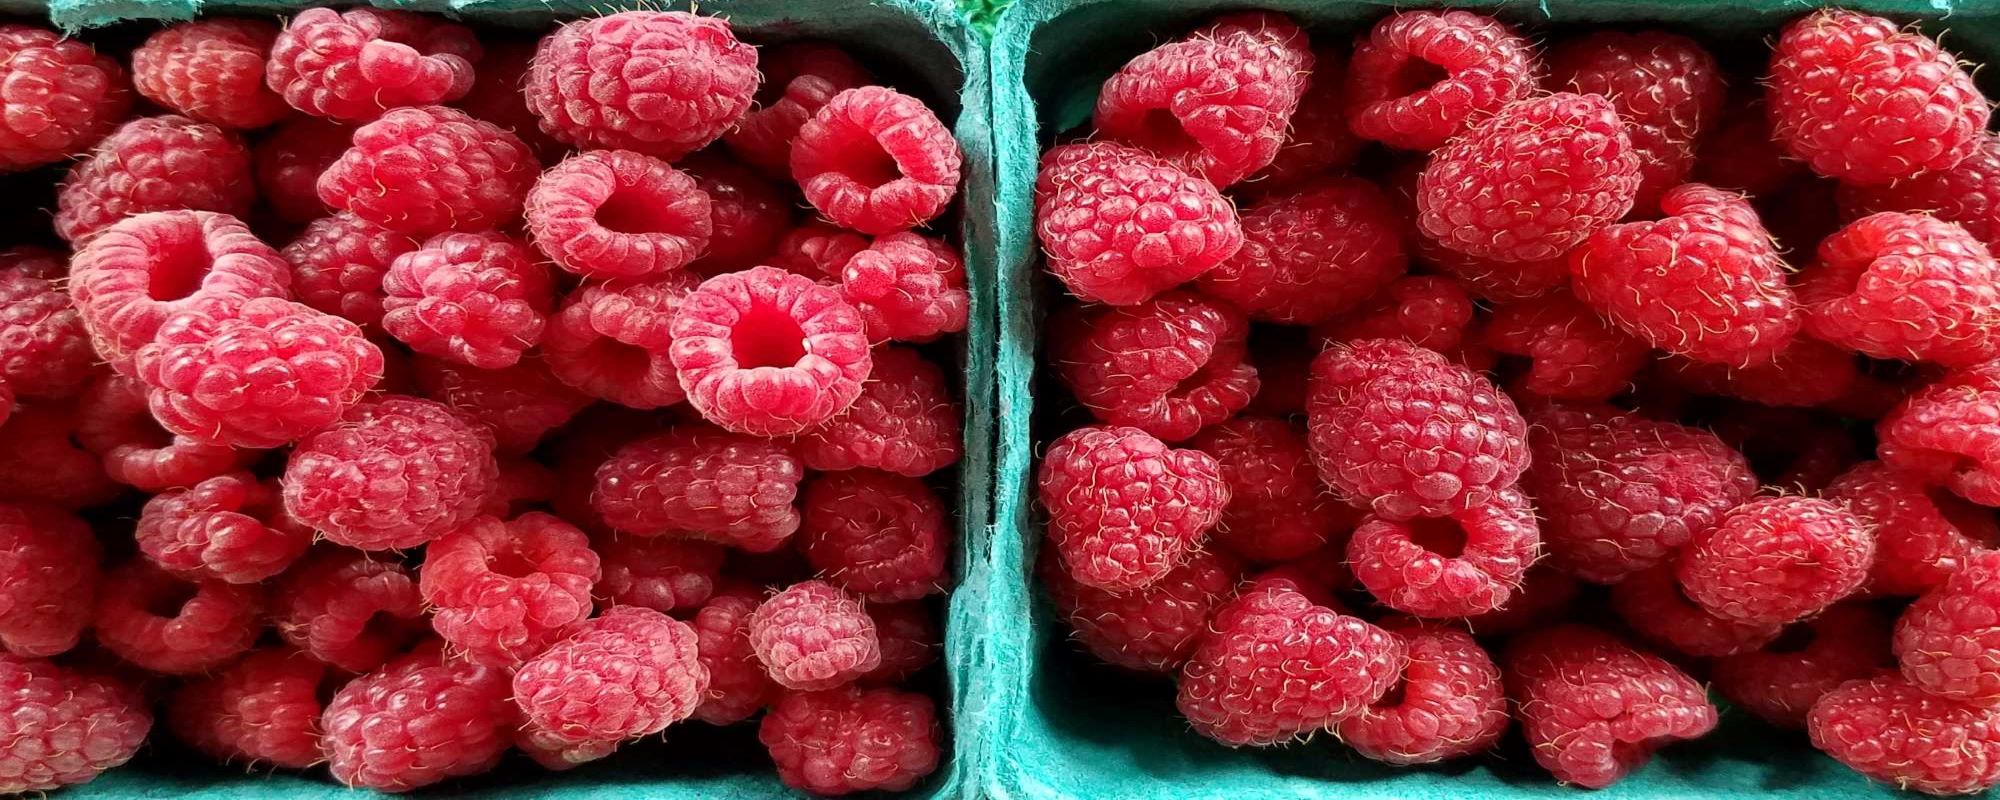 Raspberries!